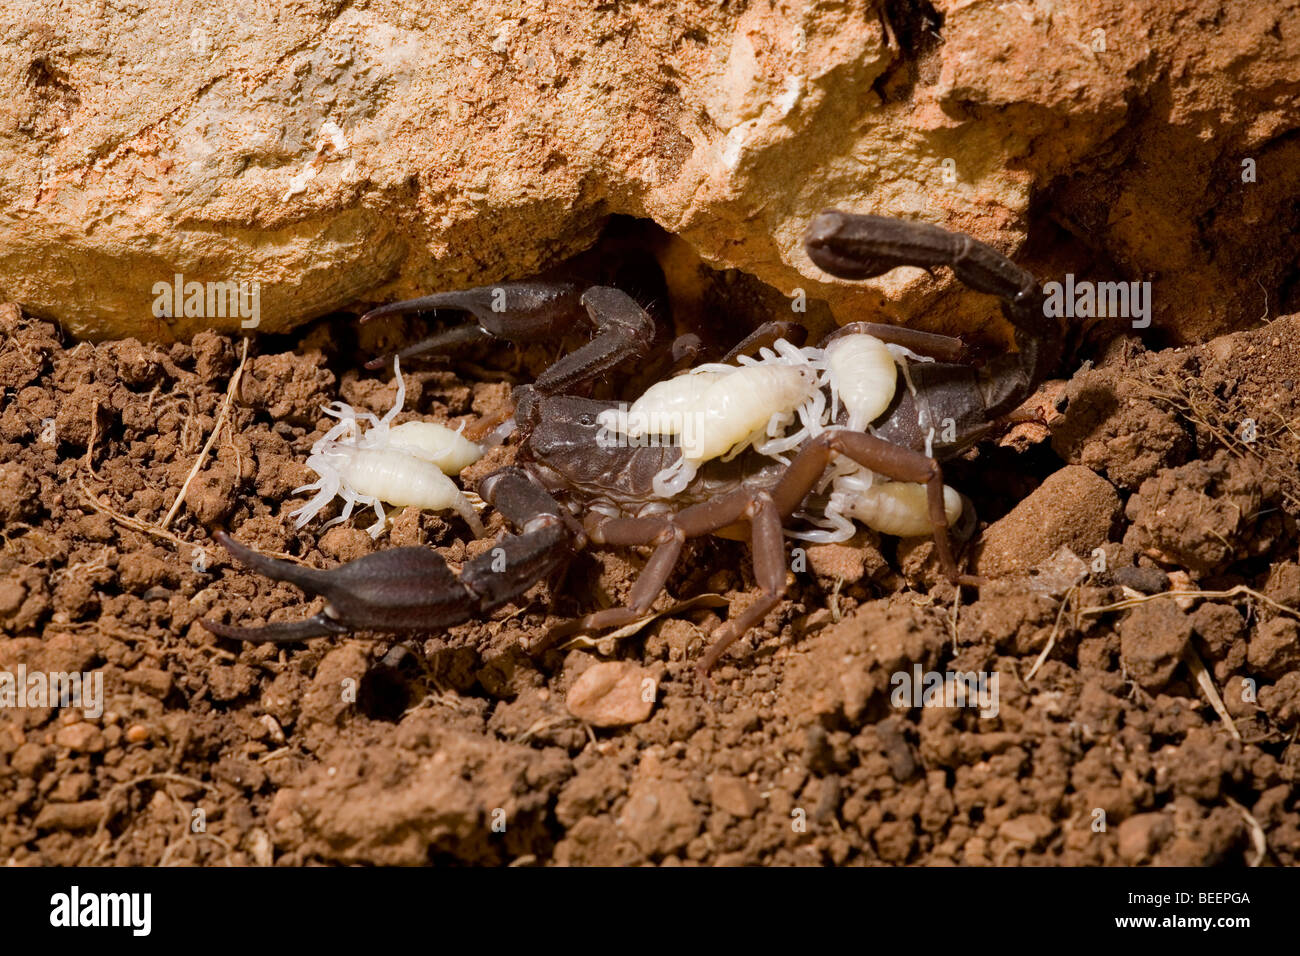 Female Iurus dufoureius scorpion carrying one day old babies Stock Photo